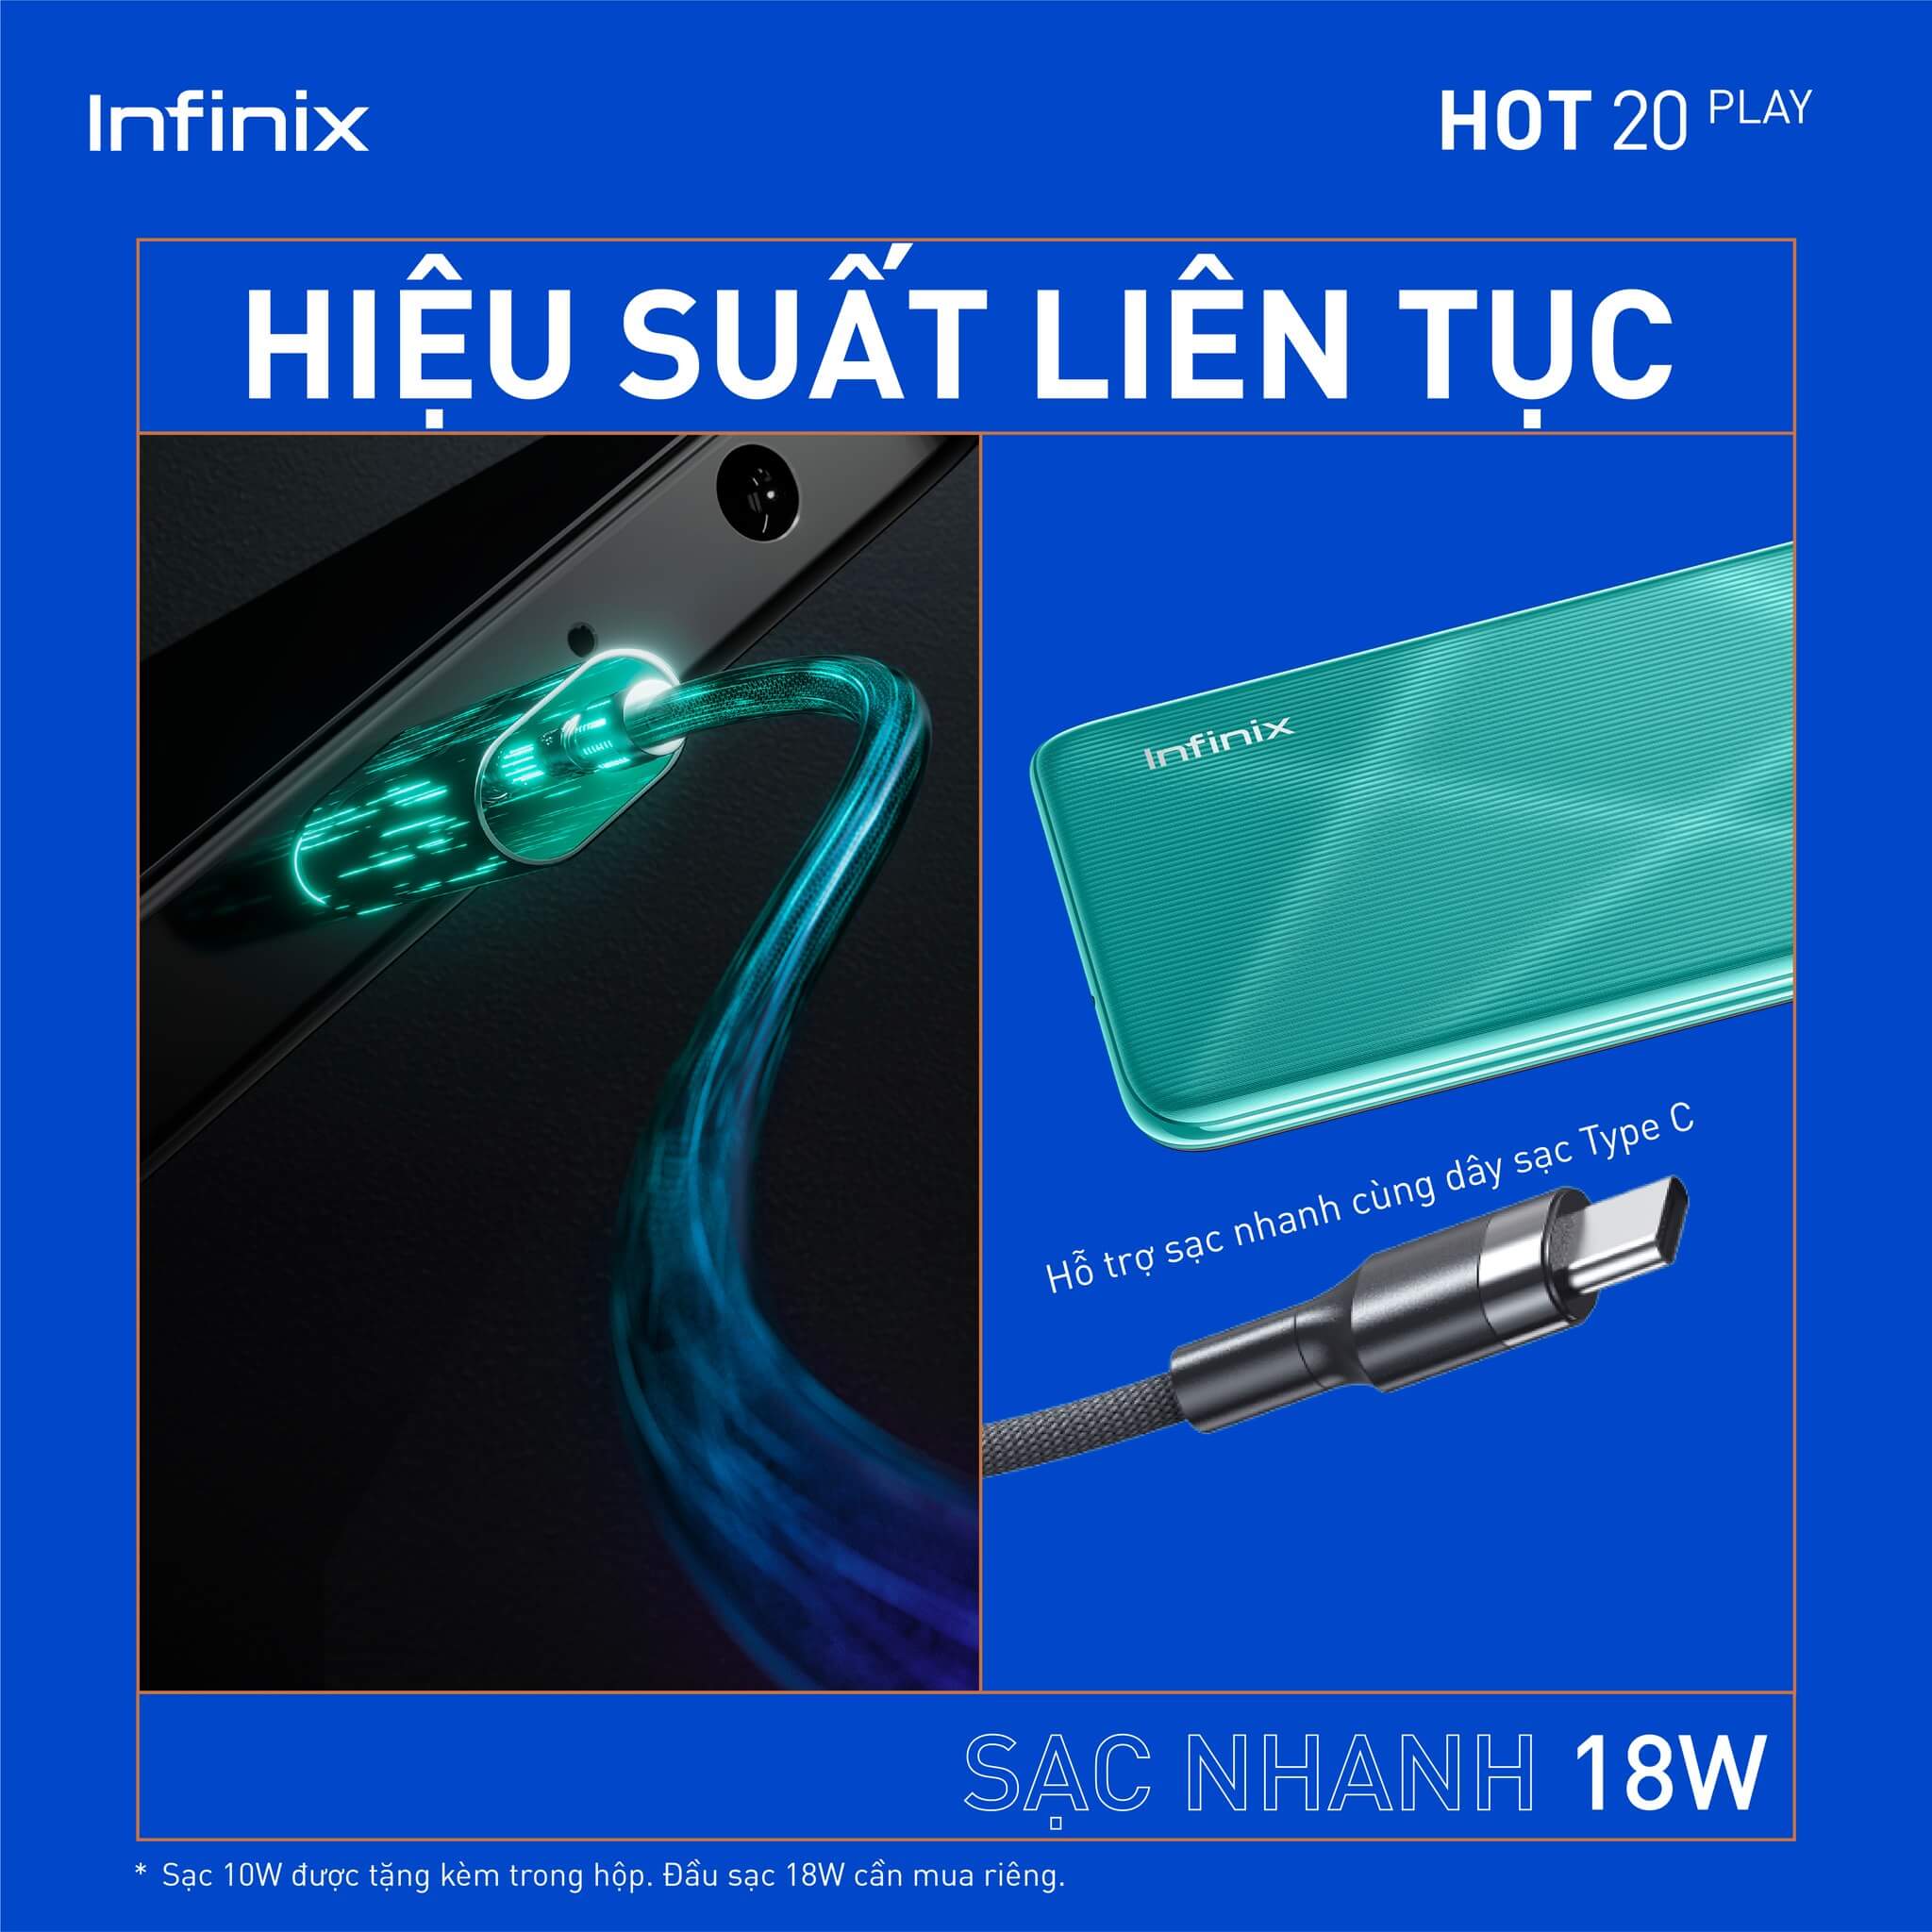 infinix free fire hot 20 precio Trang web cờ bạc trực tuyến lớn